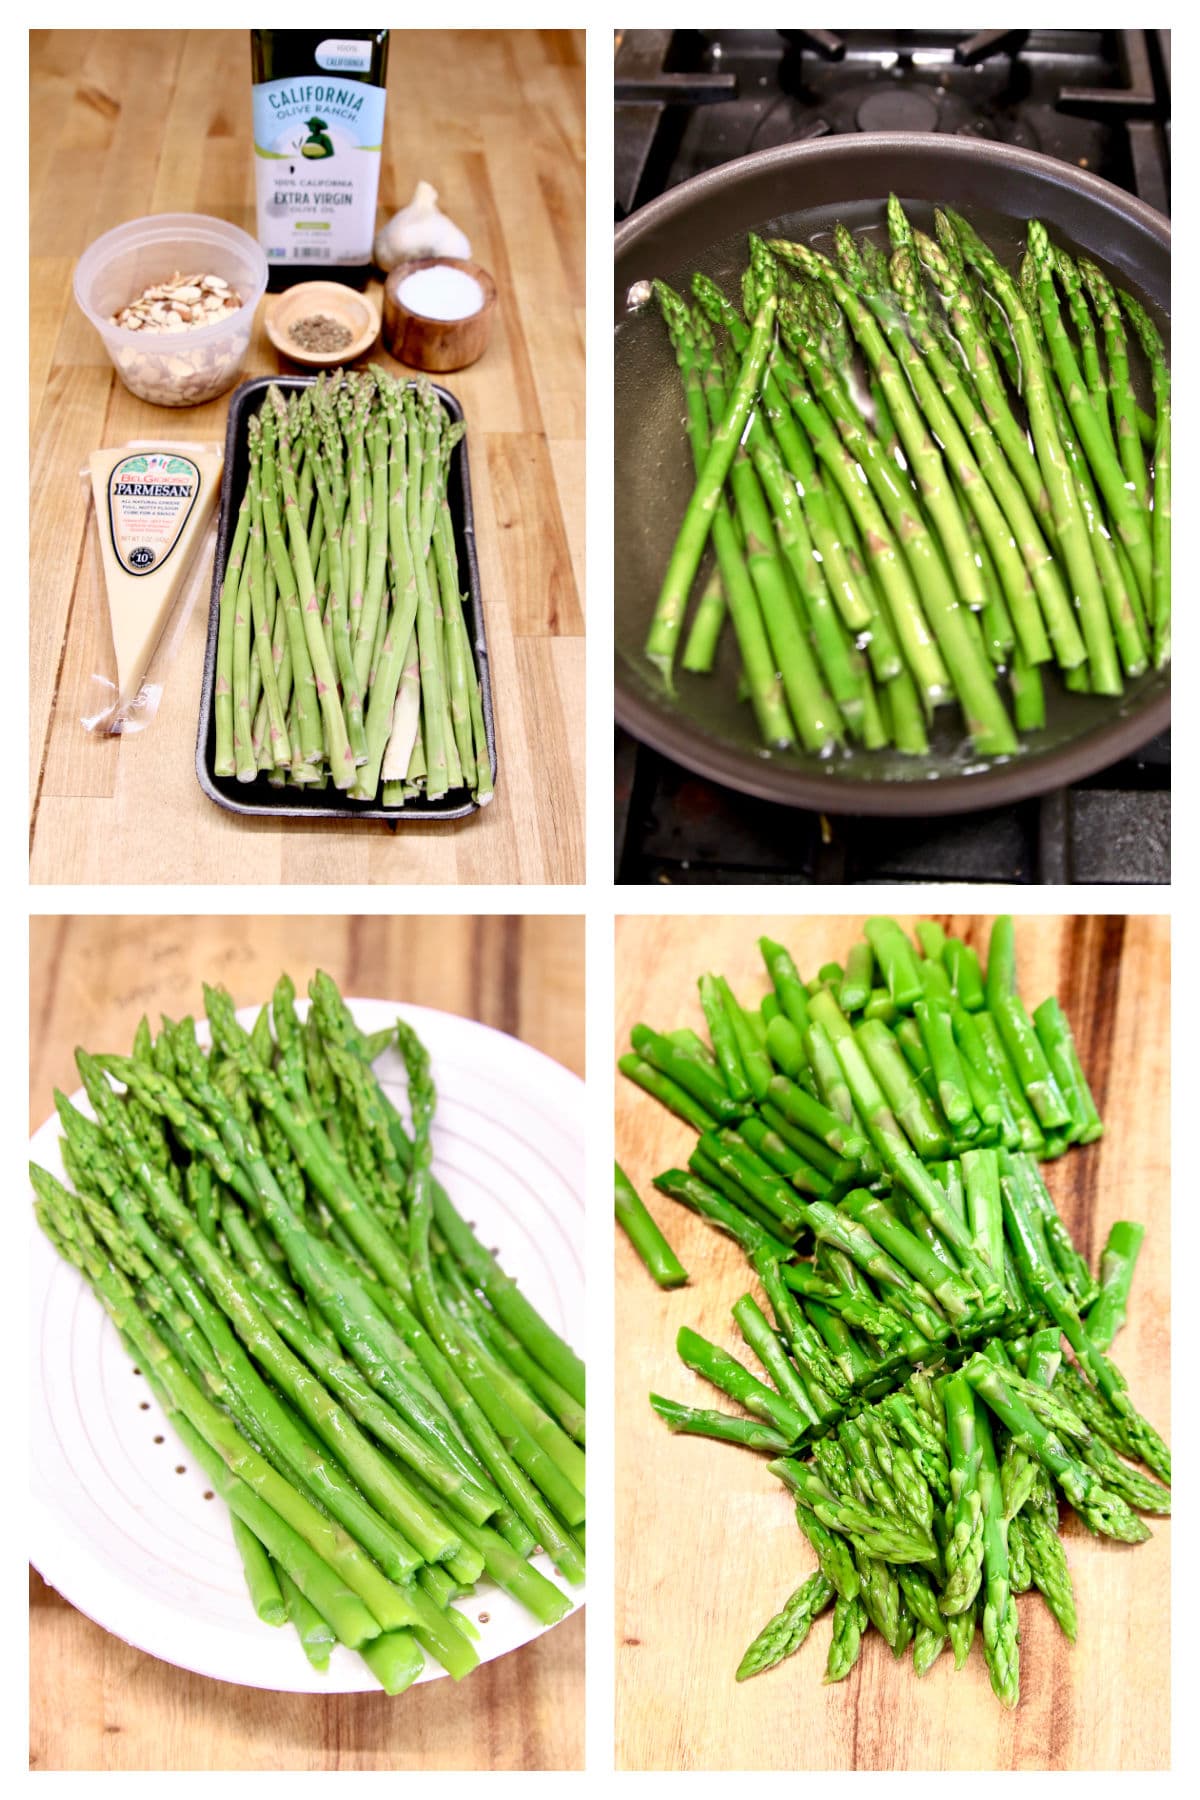 cooking asparagus for pesto.